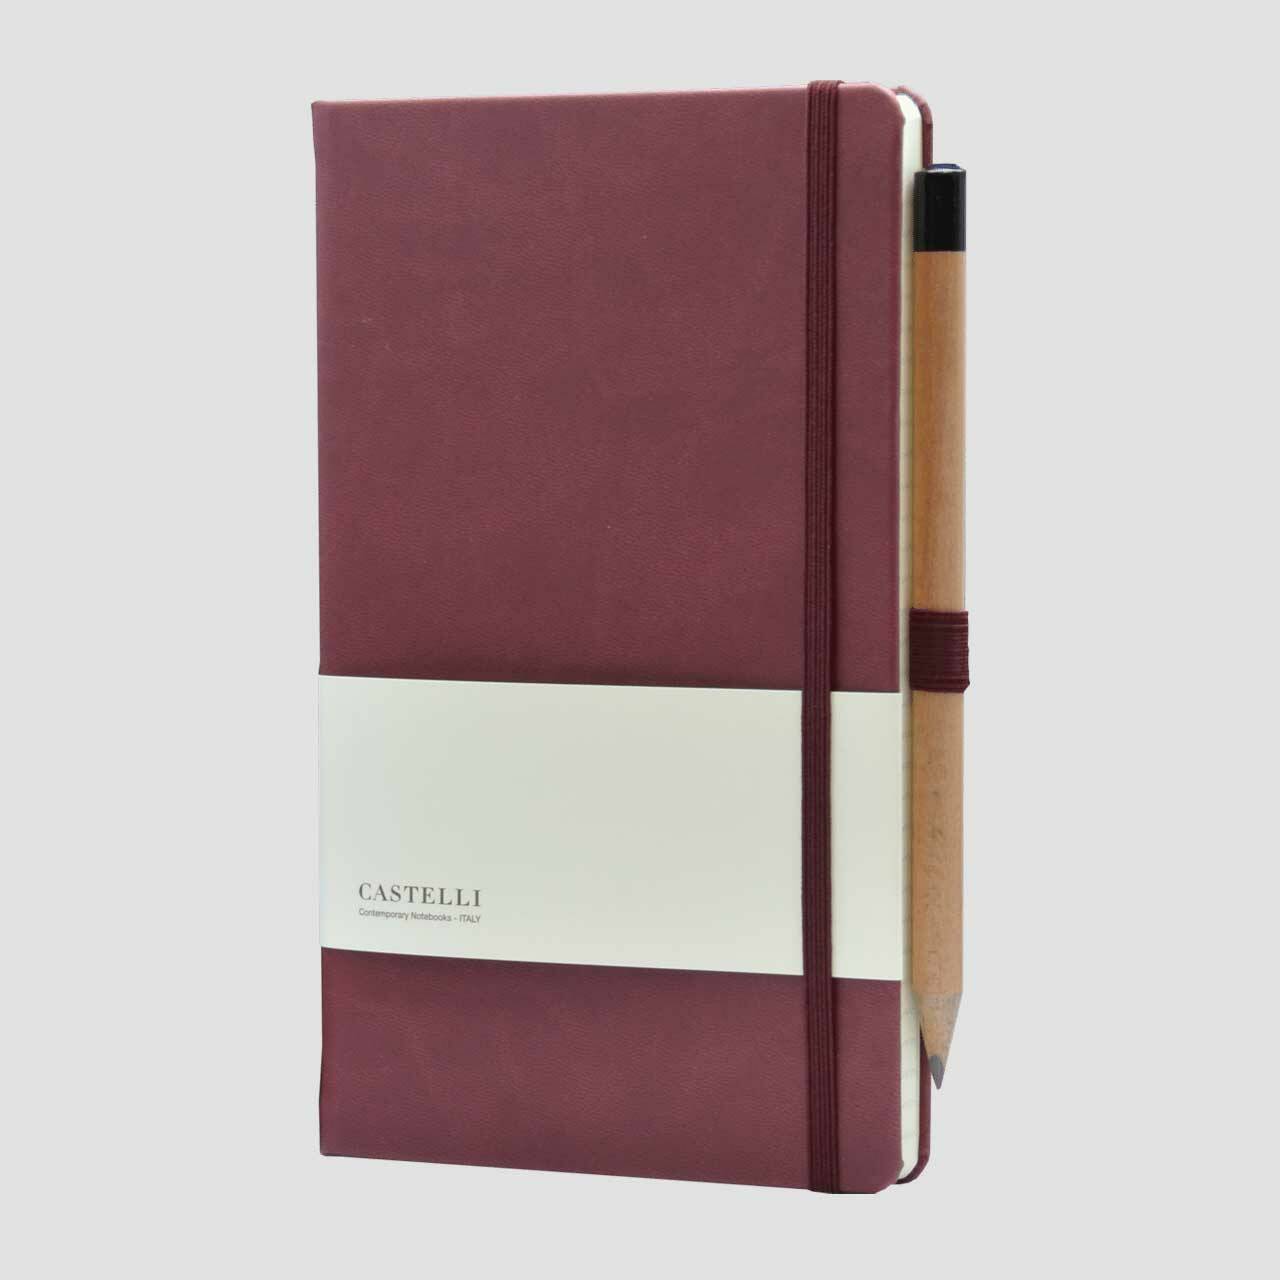 Castelli notitieboek soft touch met banderol en potlood met houder, bordeaux rood